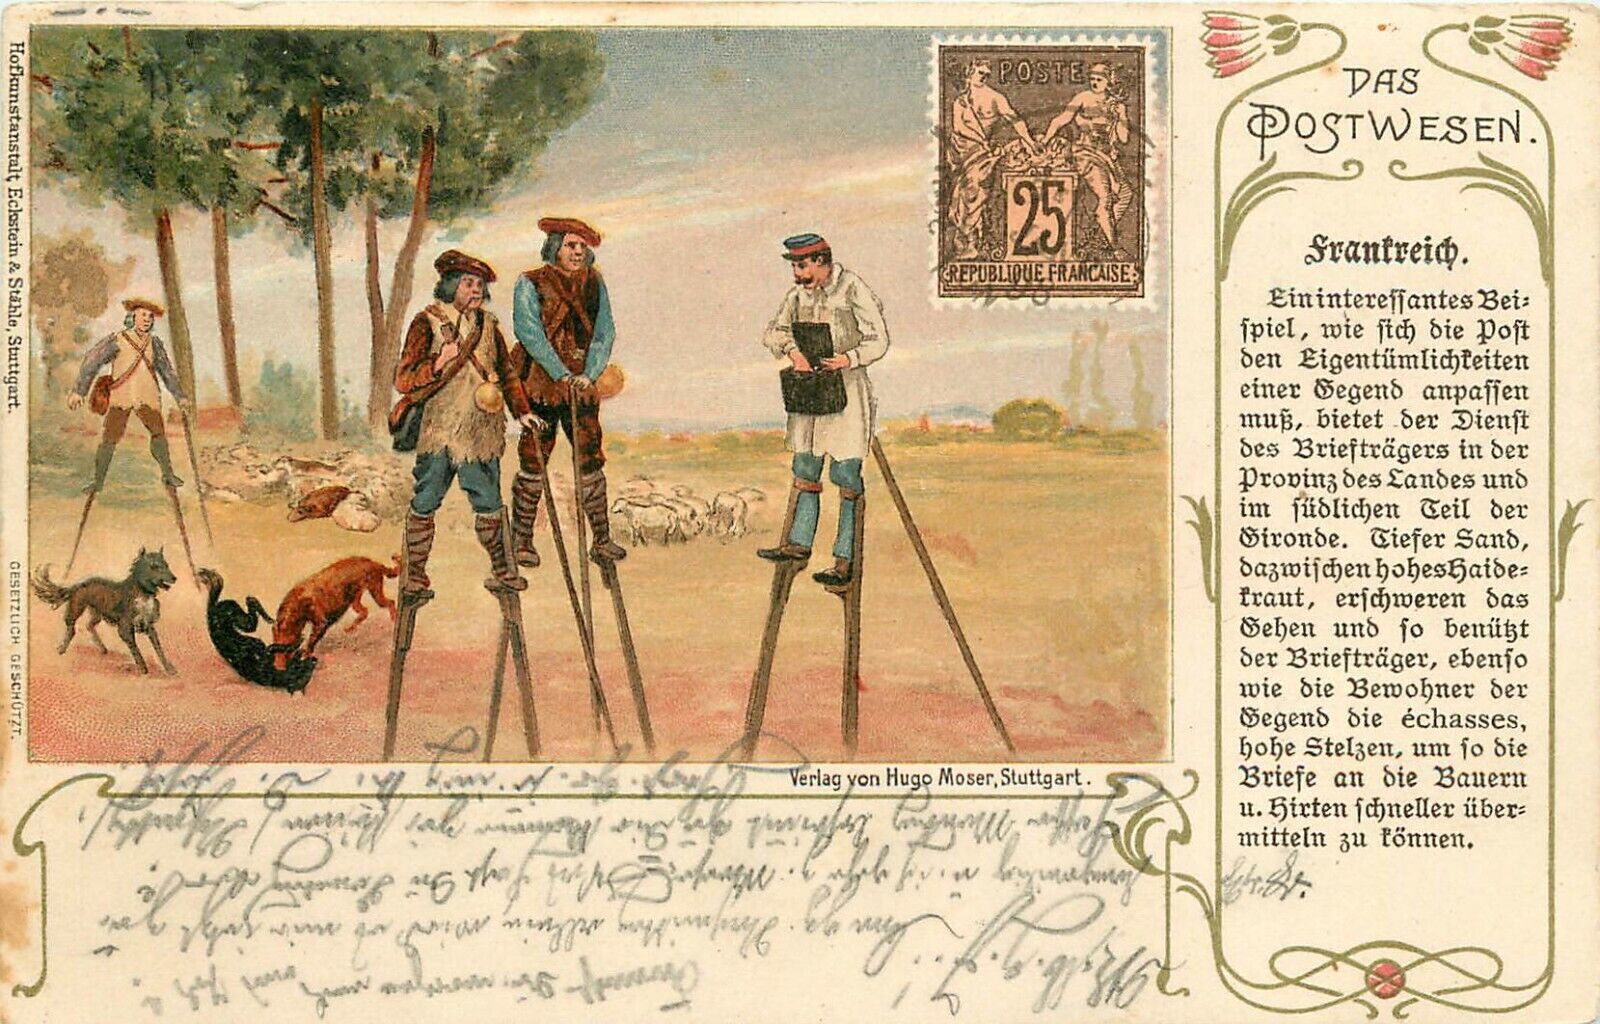 c1900 German Postcard Postman on Stilts delivers Mail to Shepherds in France